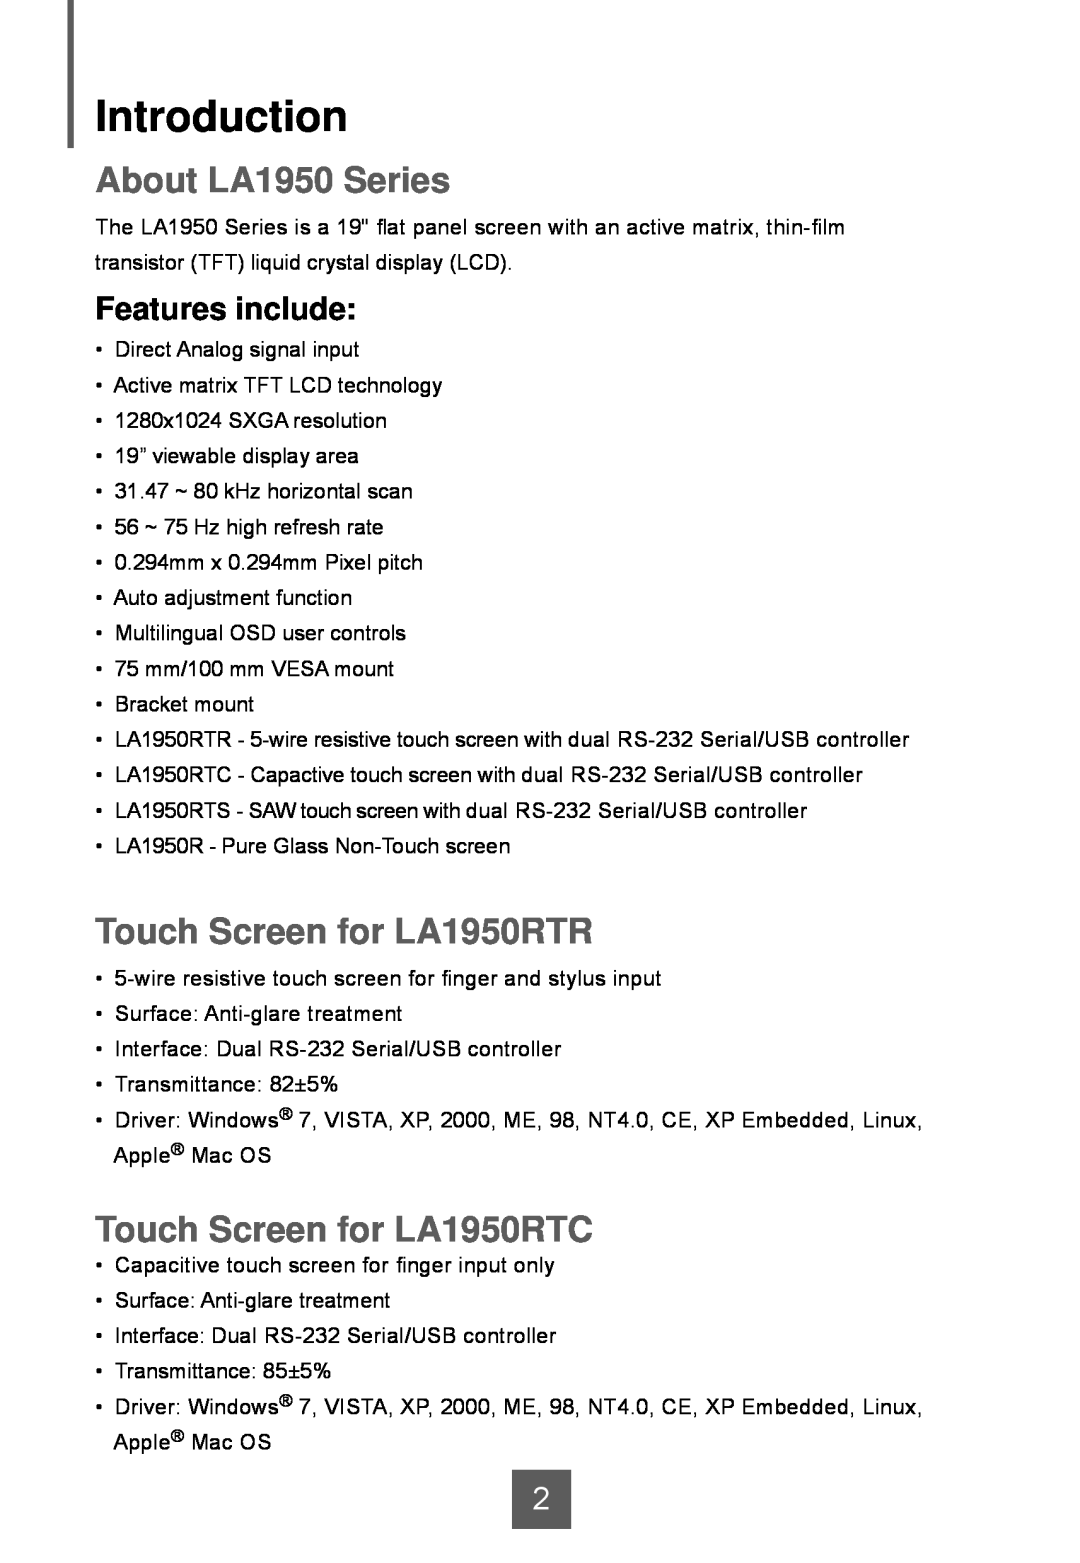 Planar Introduction, About LA1950 Series, Touch Screen for LA1950RTR, Touch Screen for LA1950RTC, Features include 